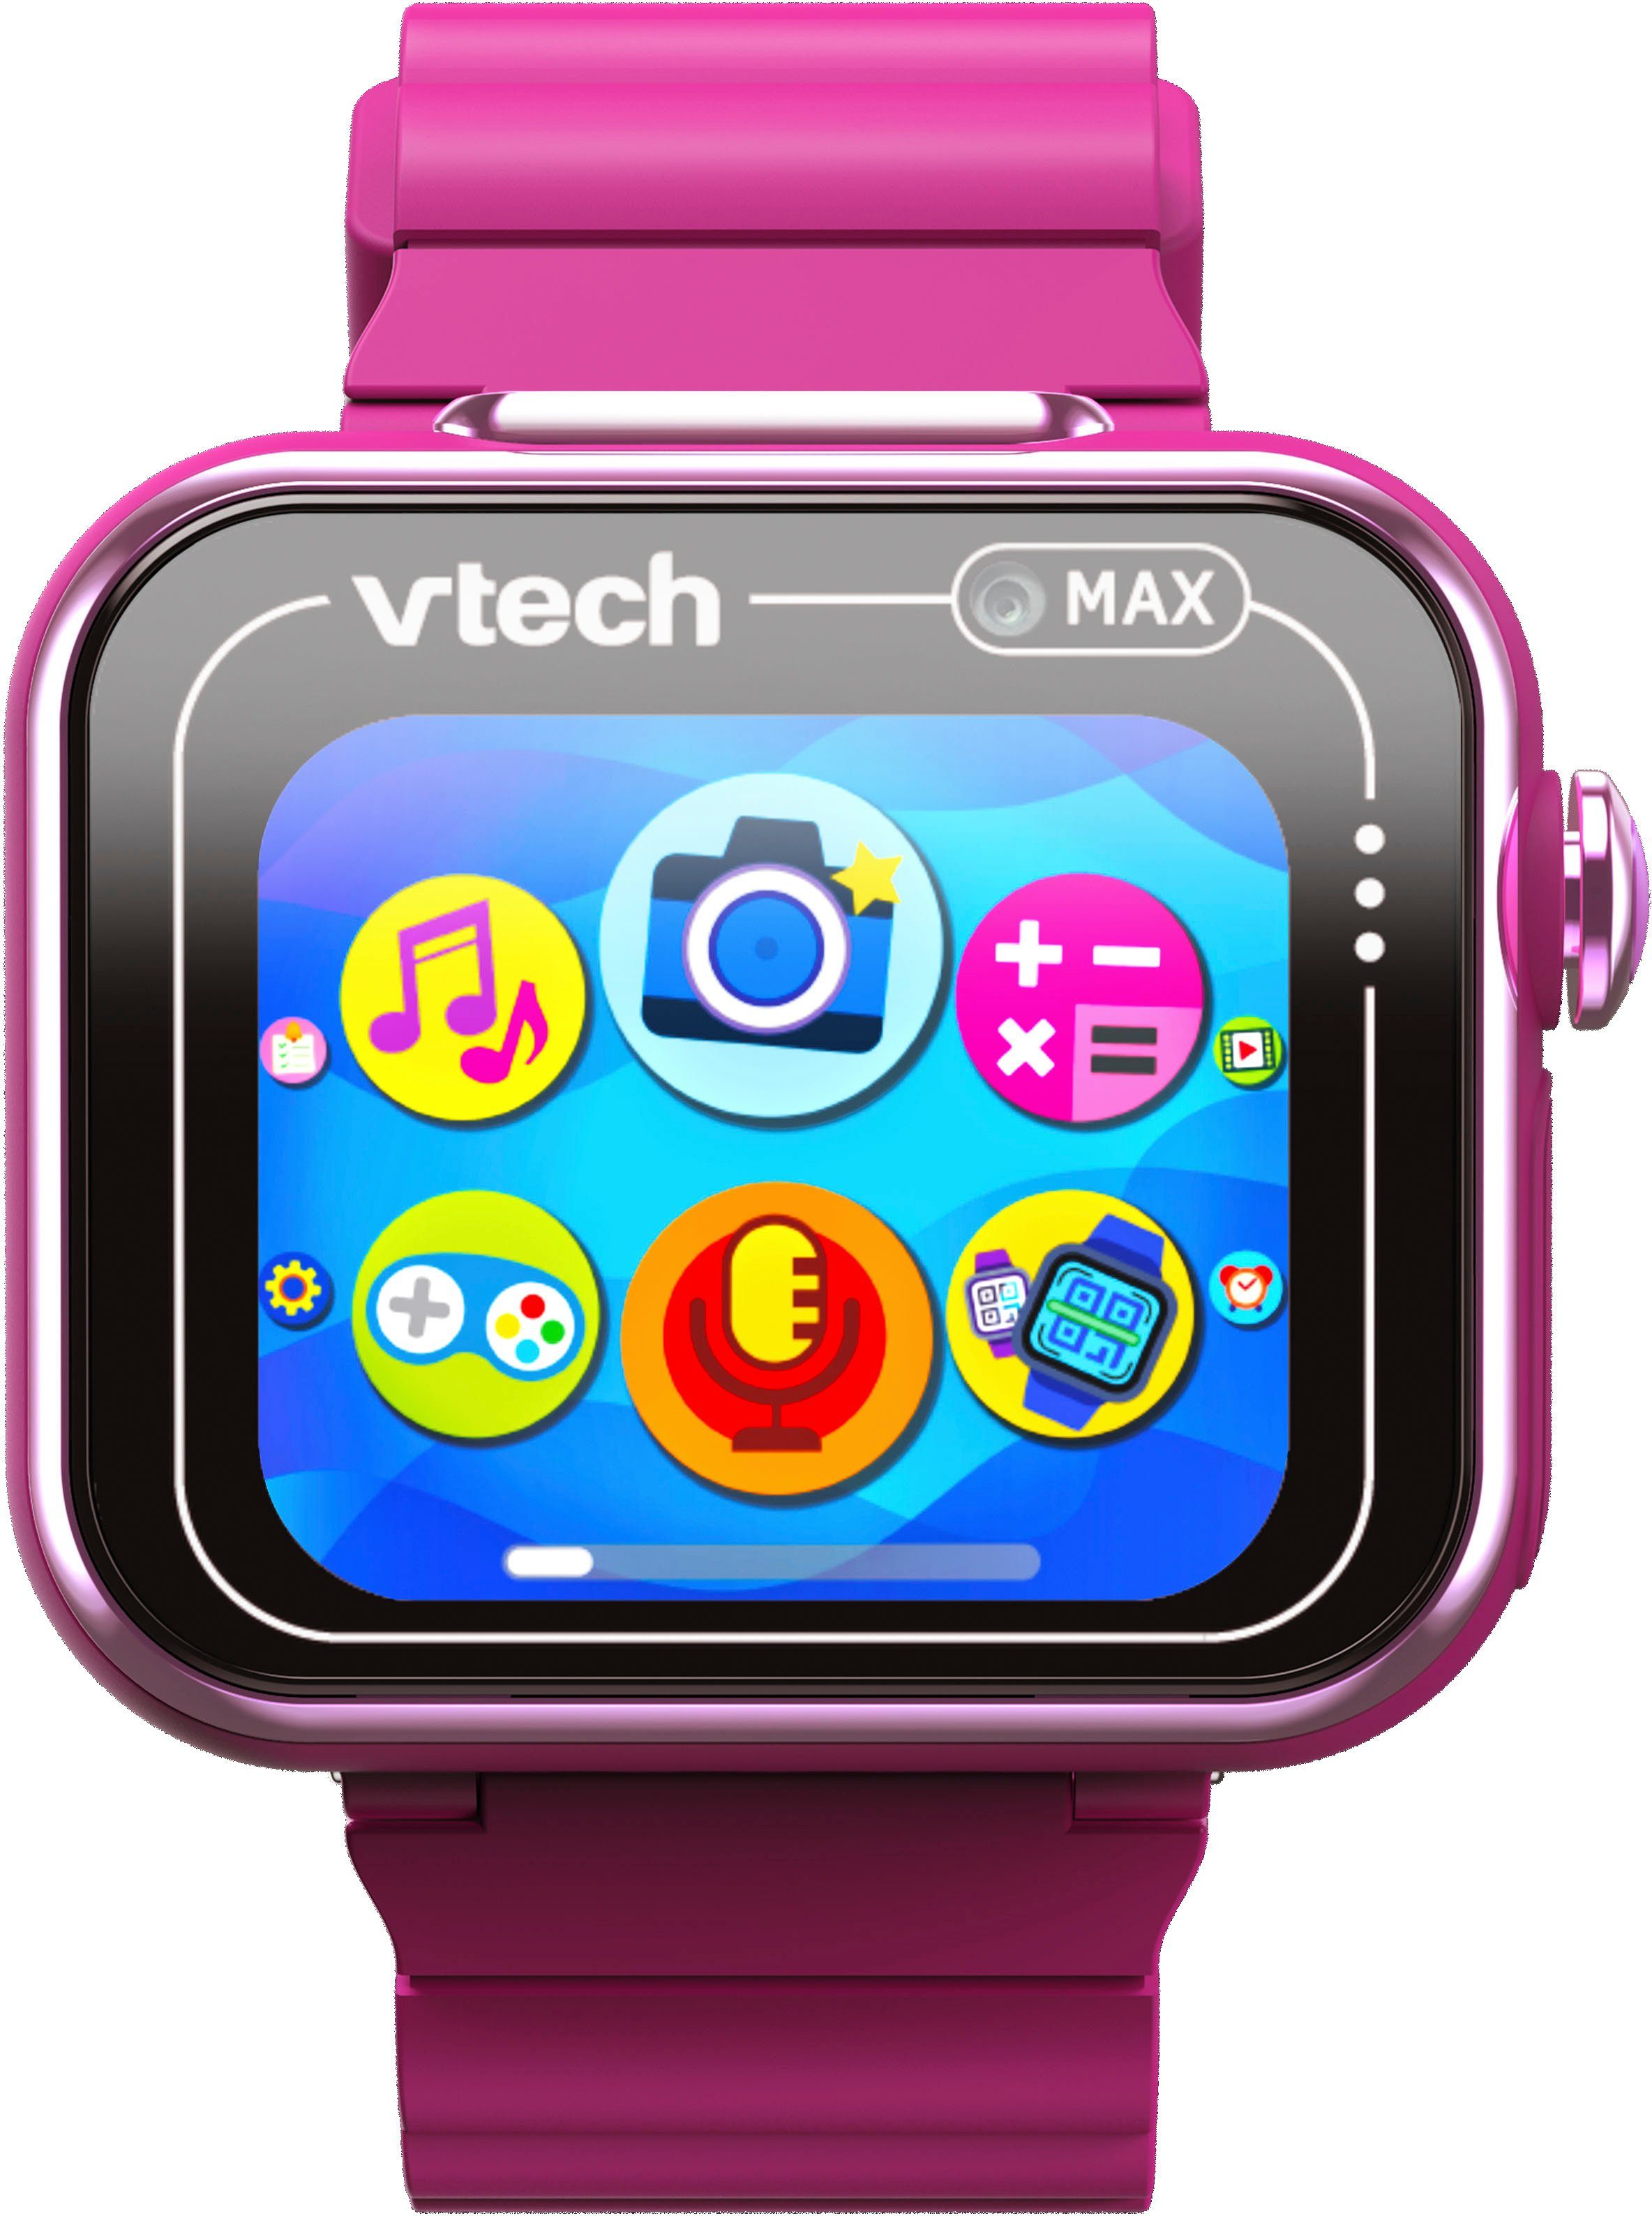 lila MAX Vtech® Smart Lernspielzeug KidiZoom Watch